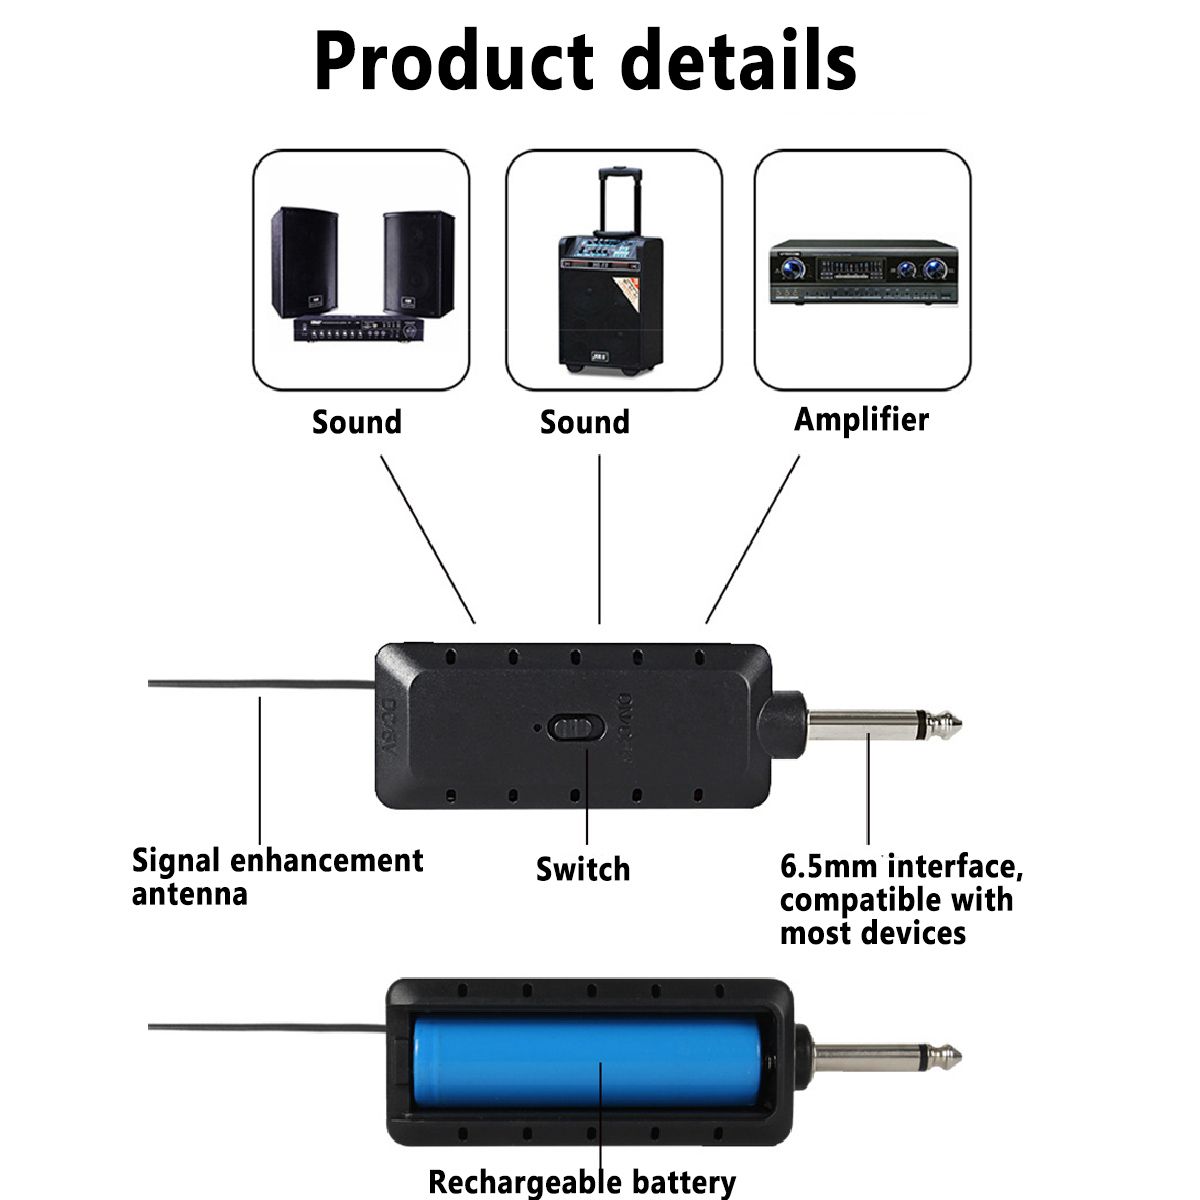 Bakeey-bluetooth-Wireless-Microphone-Square-Dance-Speaker-Computer-Amplifier-Audio-Home-KTV-Dynamic--1647989